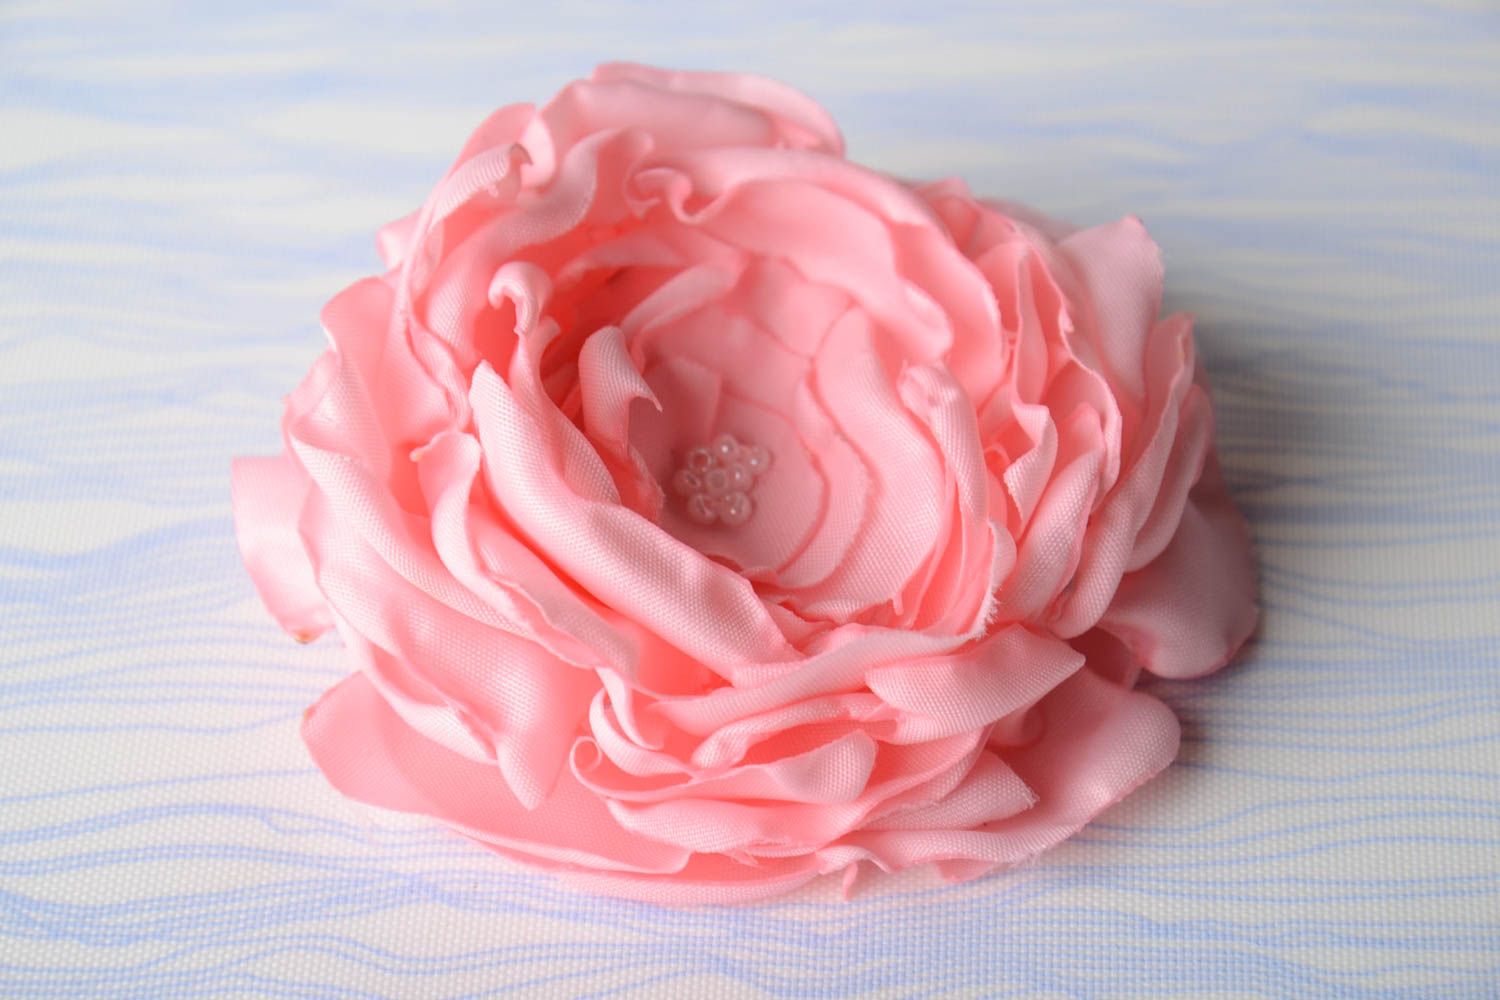 Заколка цветок из ткани розовая нежная пышная ручной работы красивая хэнд мейд фото 1